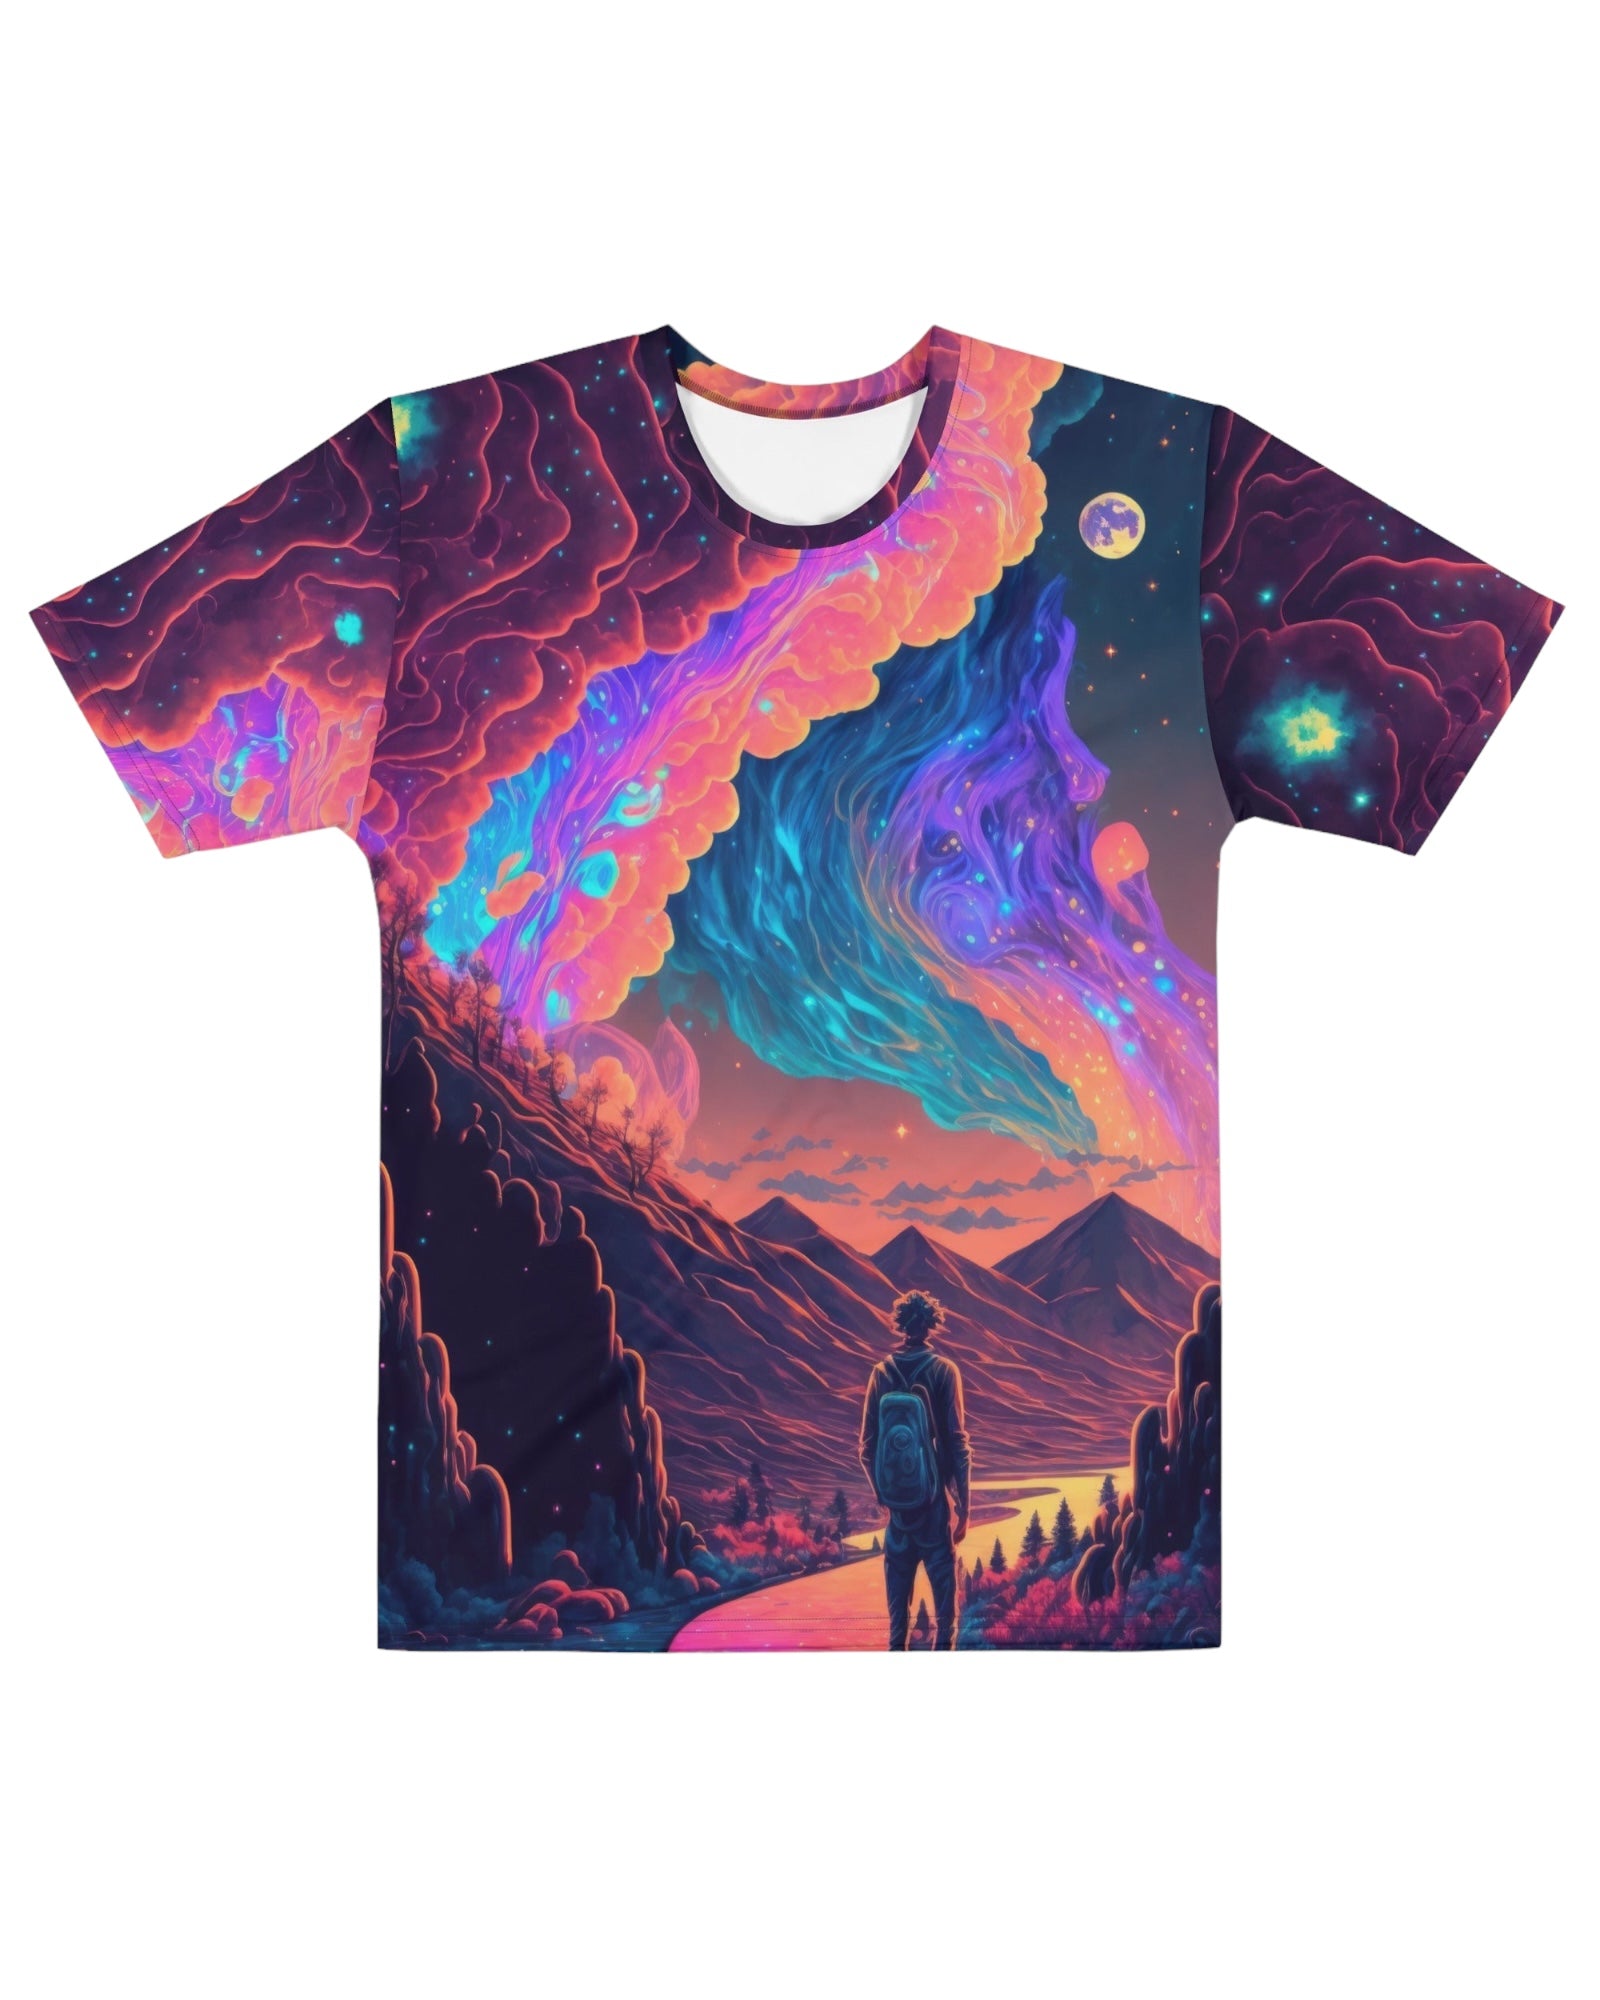 Lost in Dreams T-Shirt